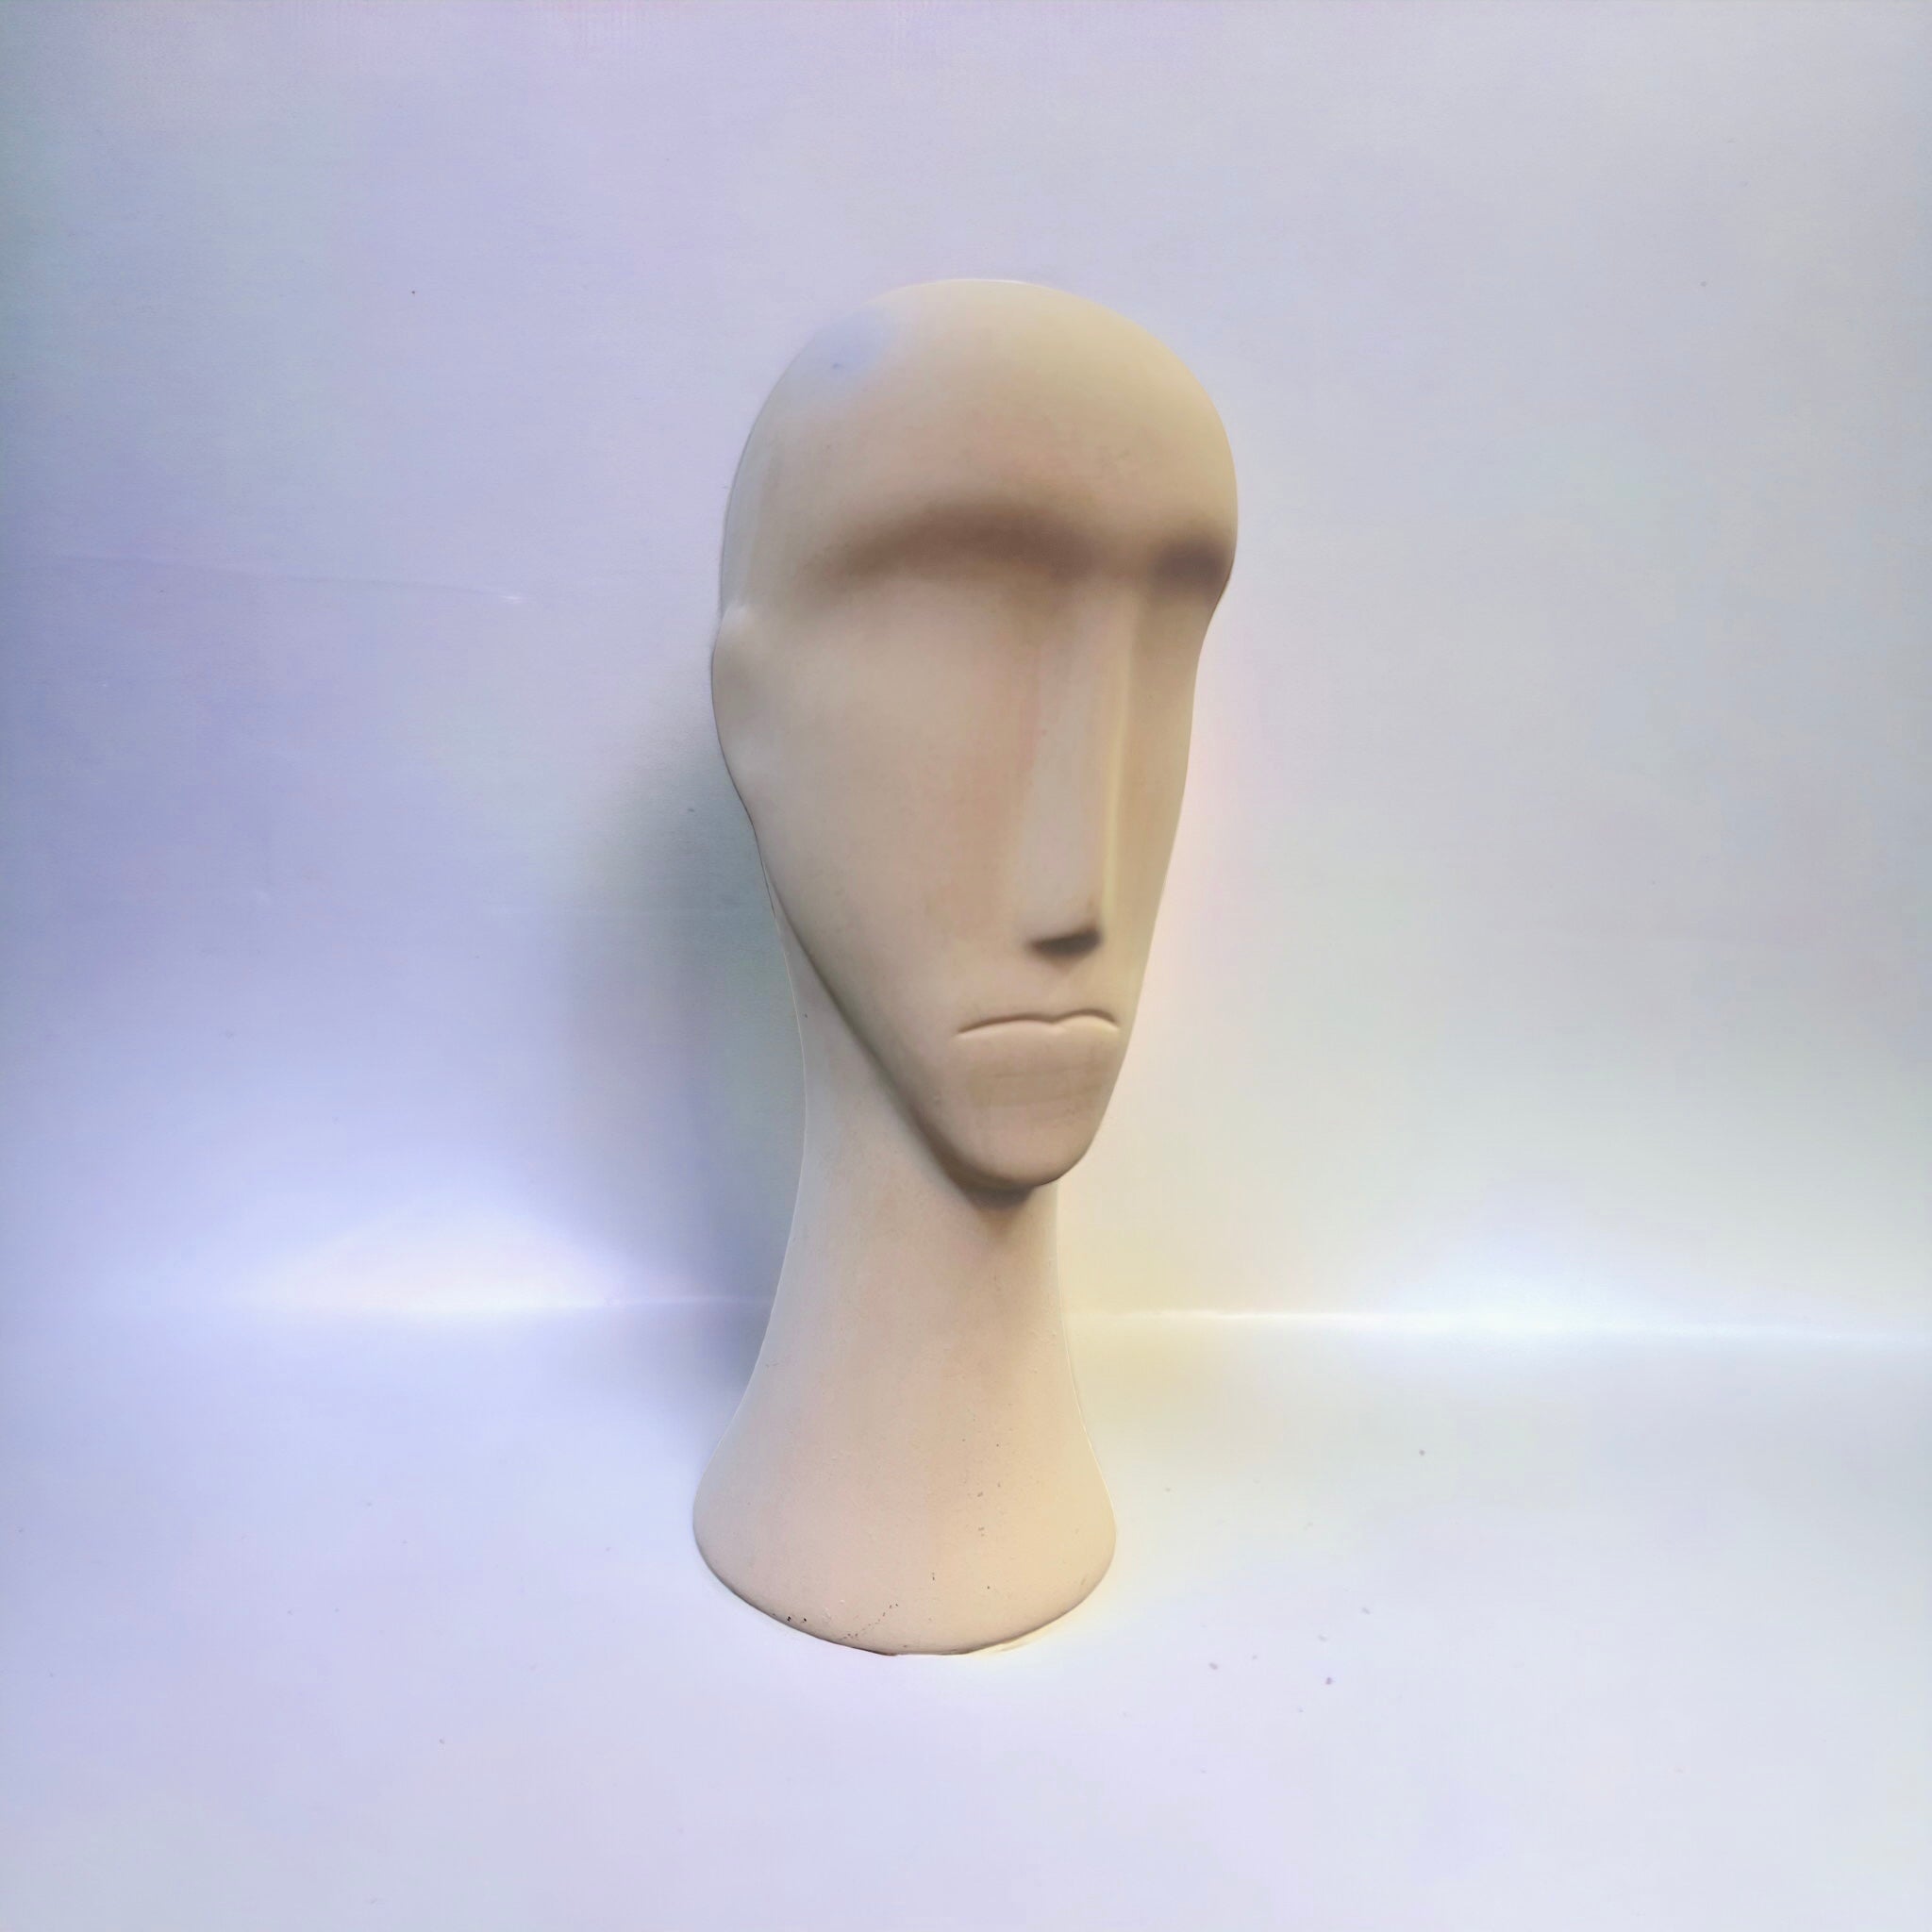 IKEA Nagon Ceramic Head Sculpture (Vintage)(Sold)